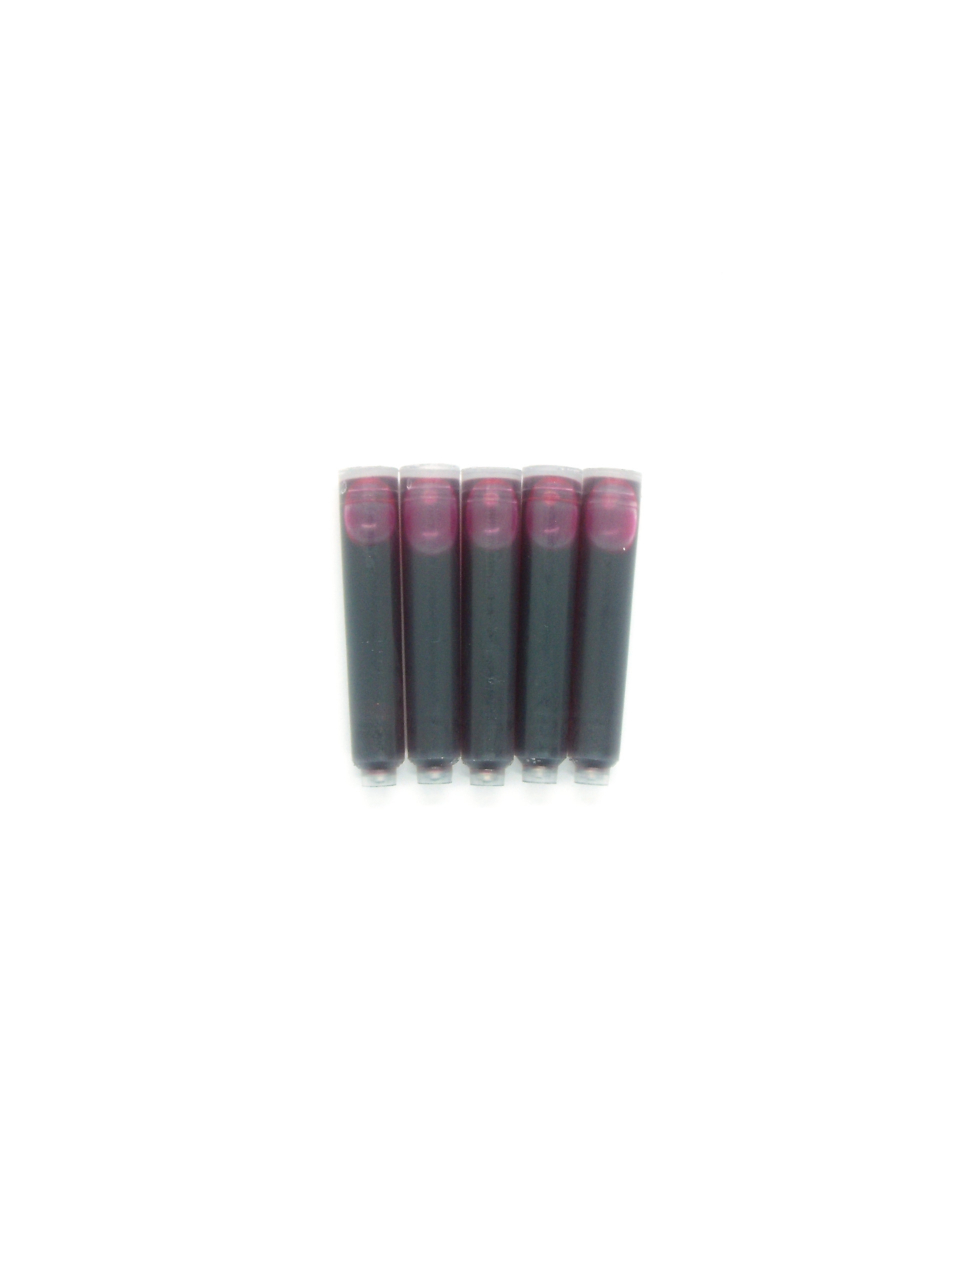 PenConverter Ink Cartridges For Zhenjue Fountain Pens (Pink)